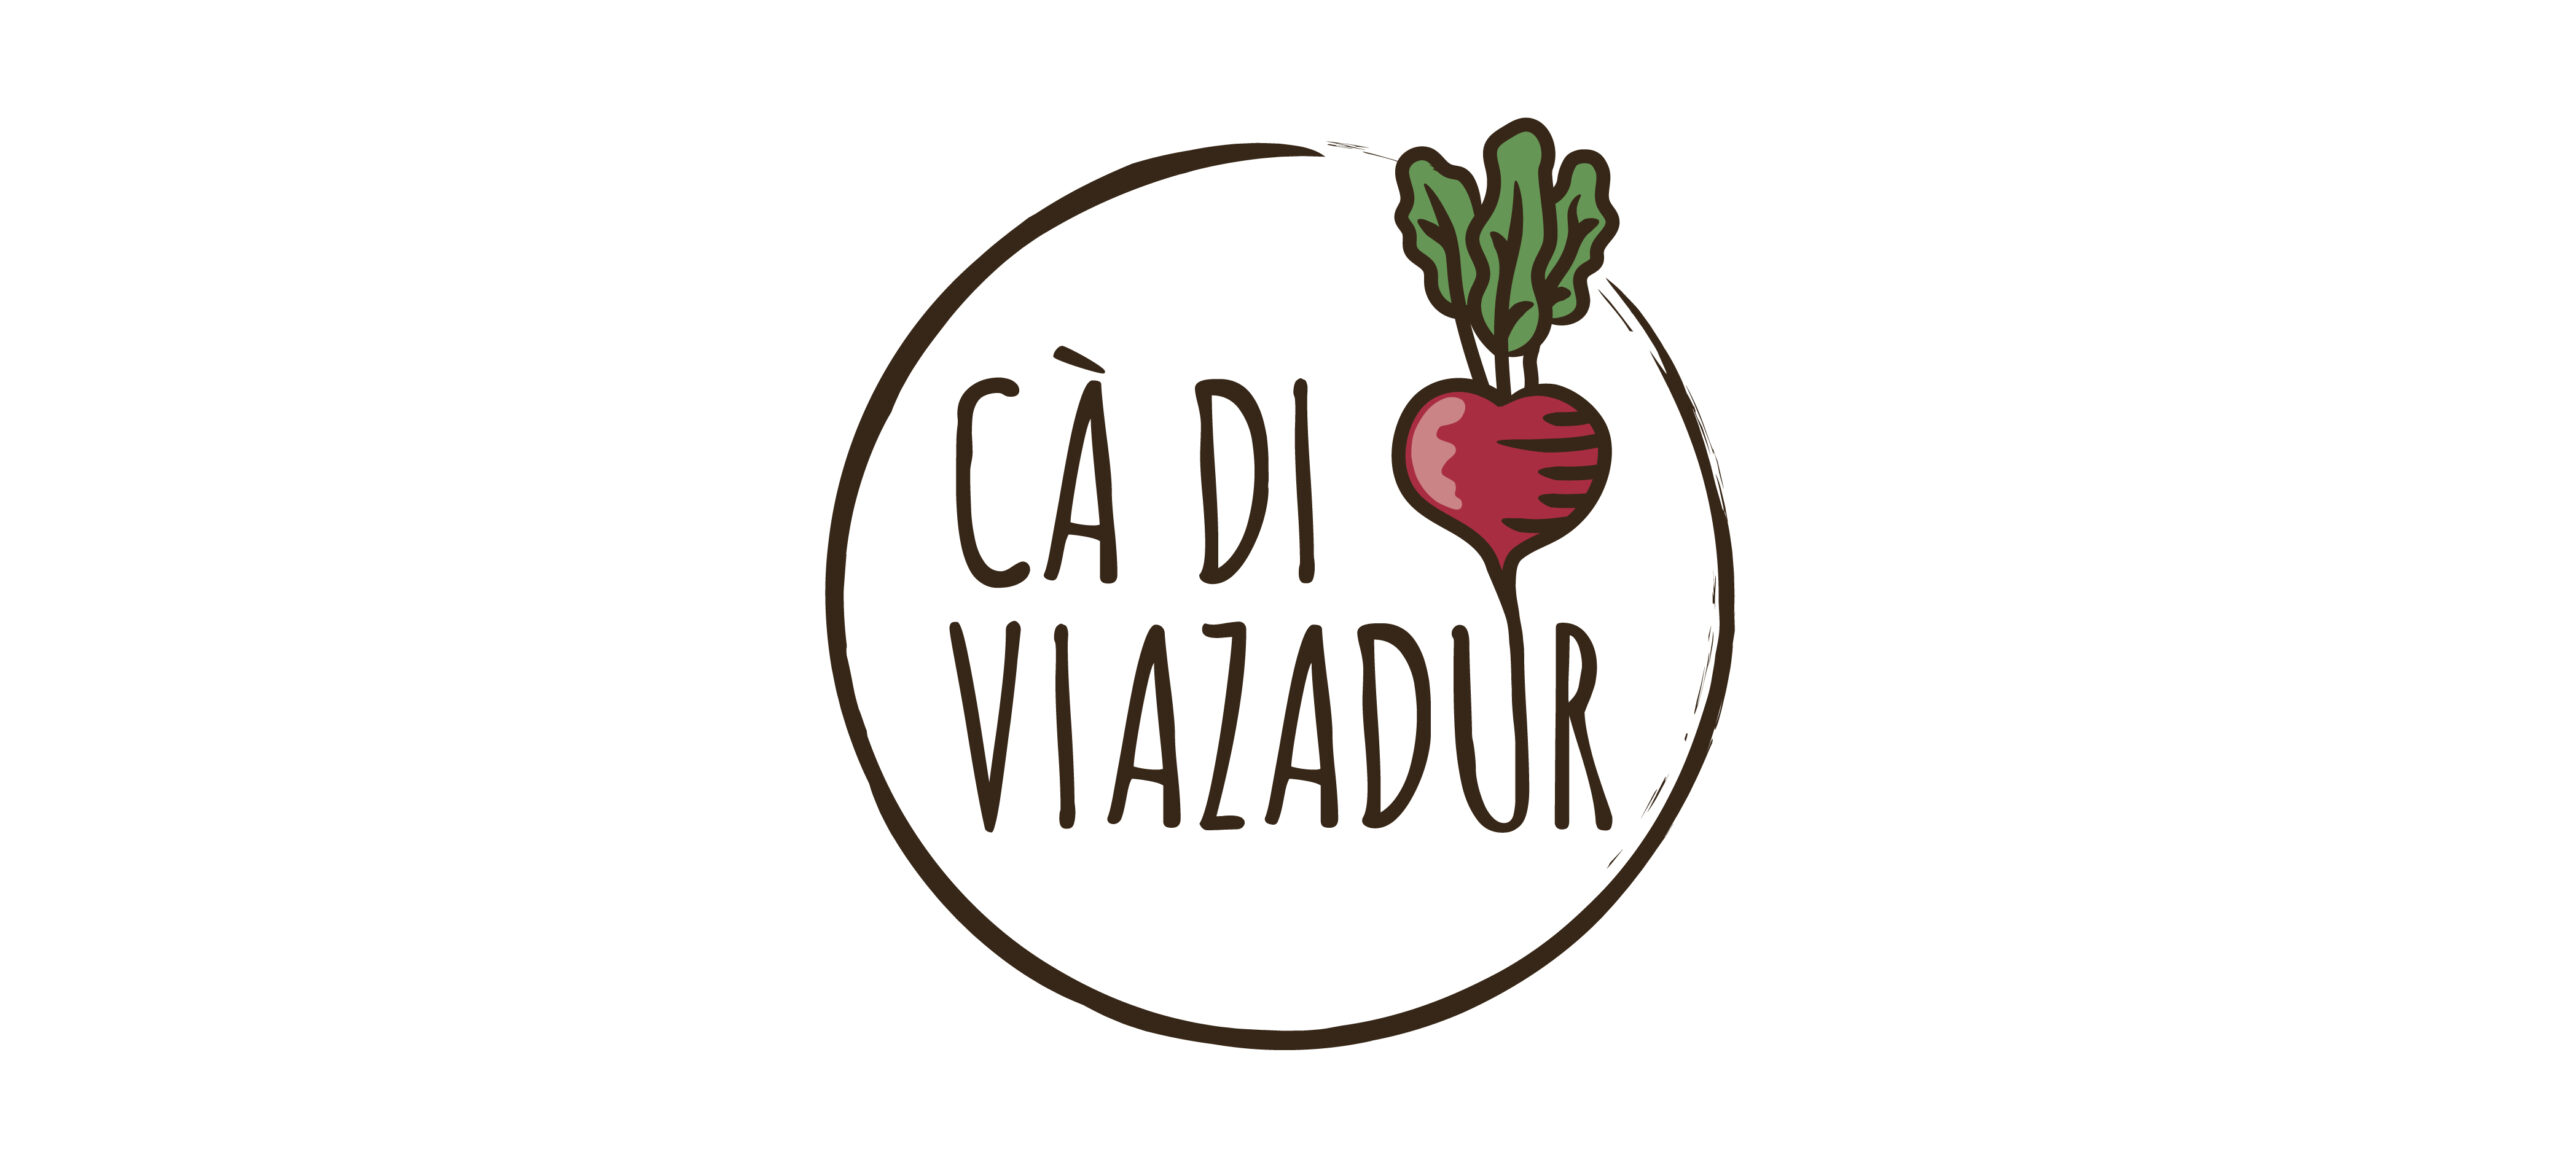 Cà di Viazadur logo